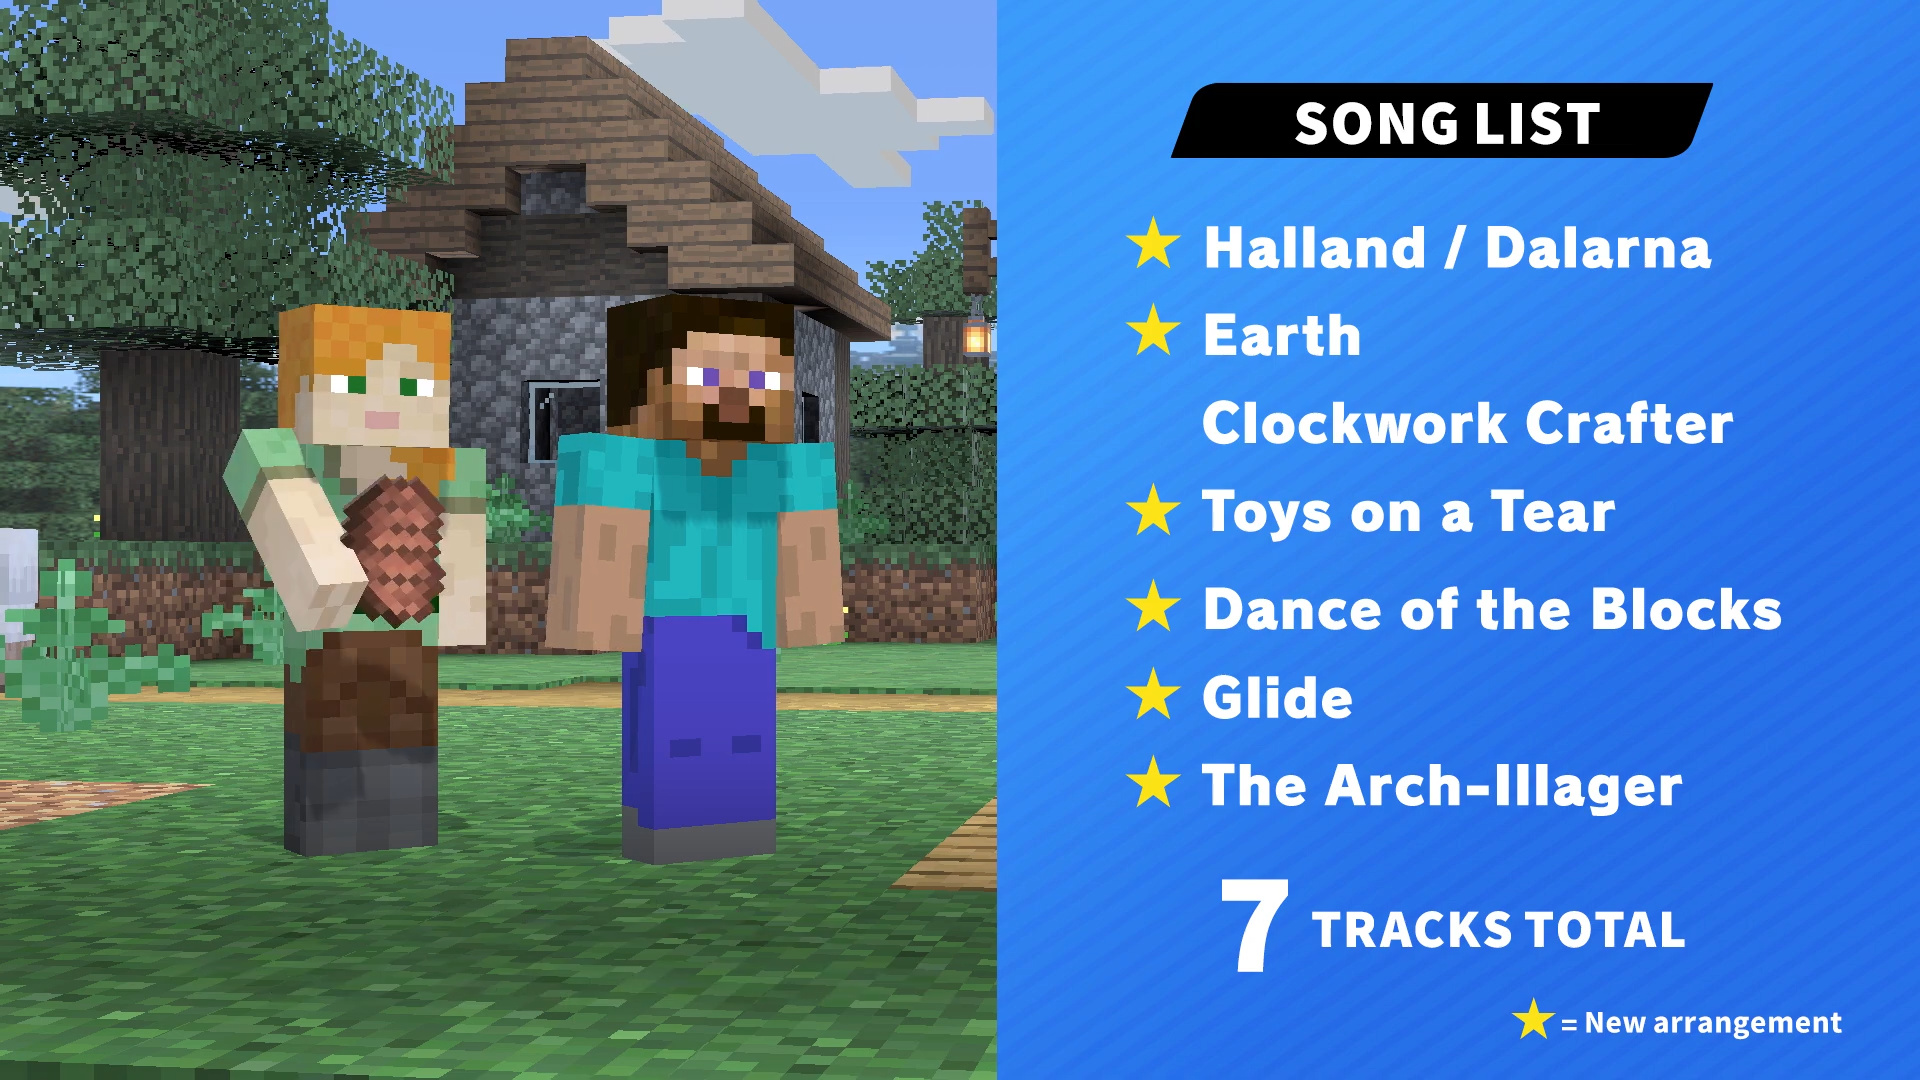 Full Smash Bros Ultimate Minecraft Song List Revealed Seven Tracks In Total Nintendo Life